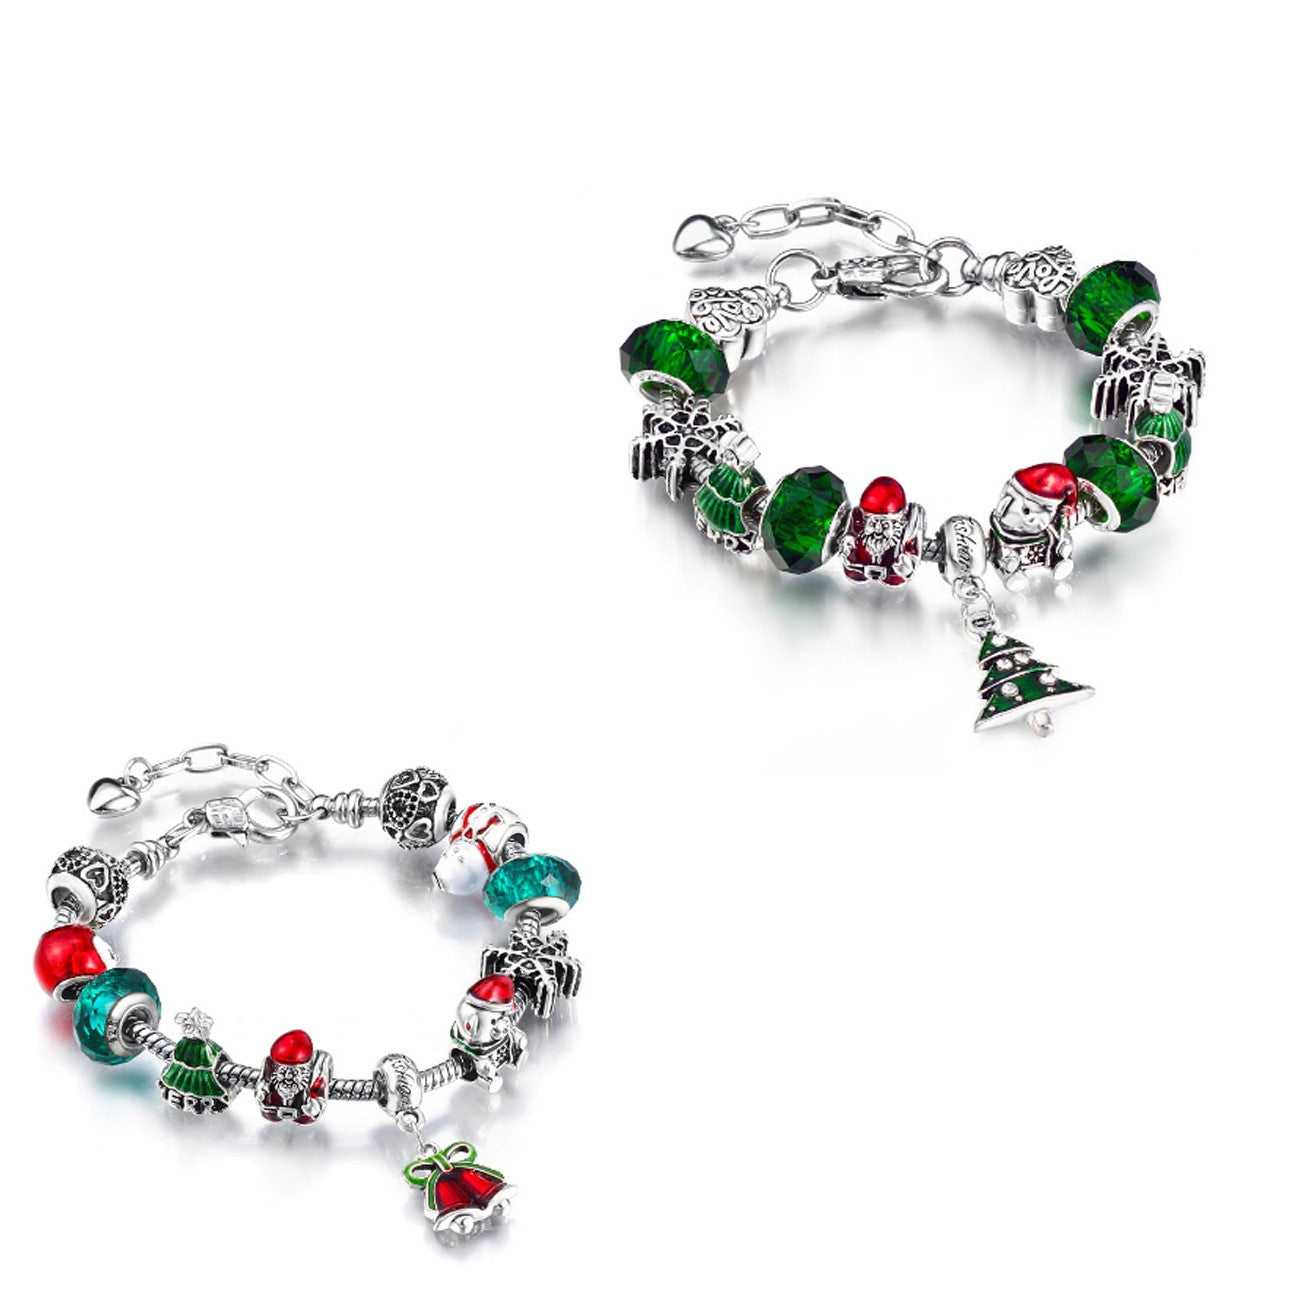 Christmas Themed Crystal Charm Bracelets Made With Swarovski Elements